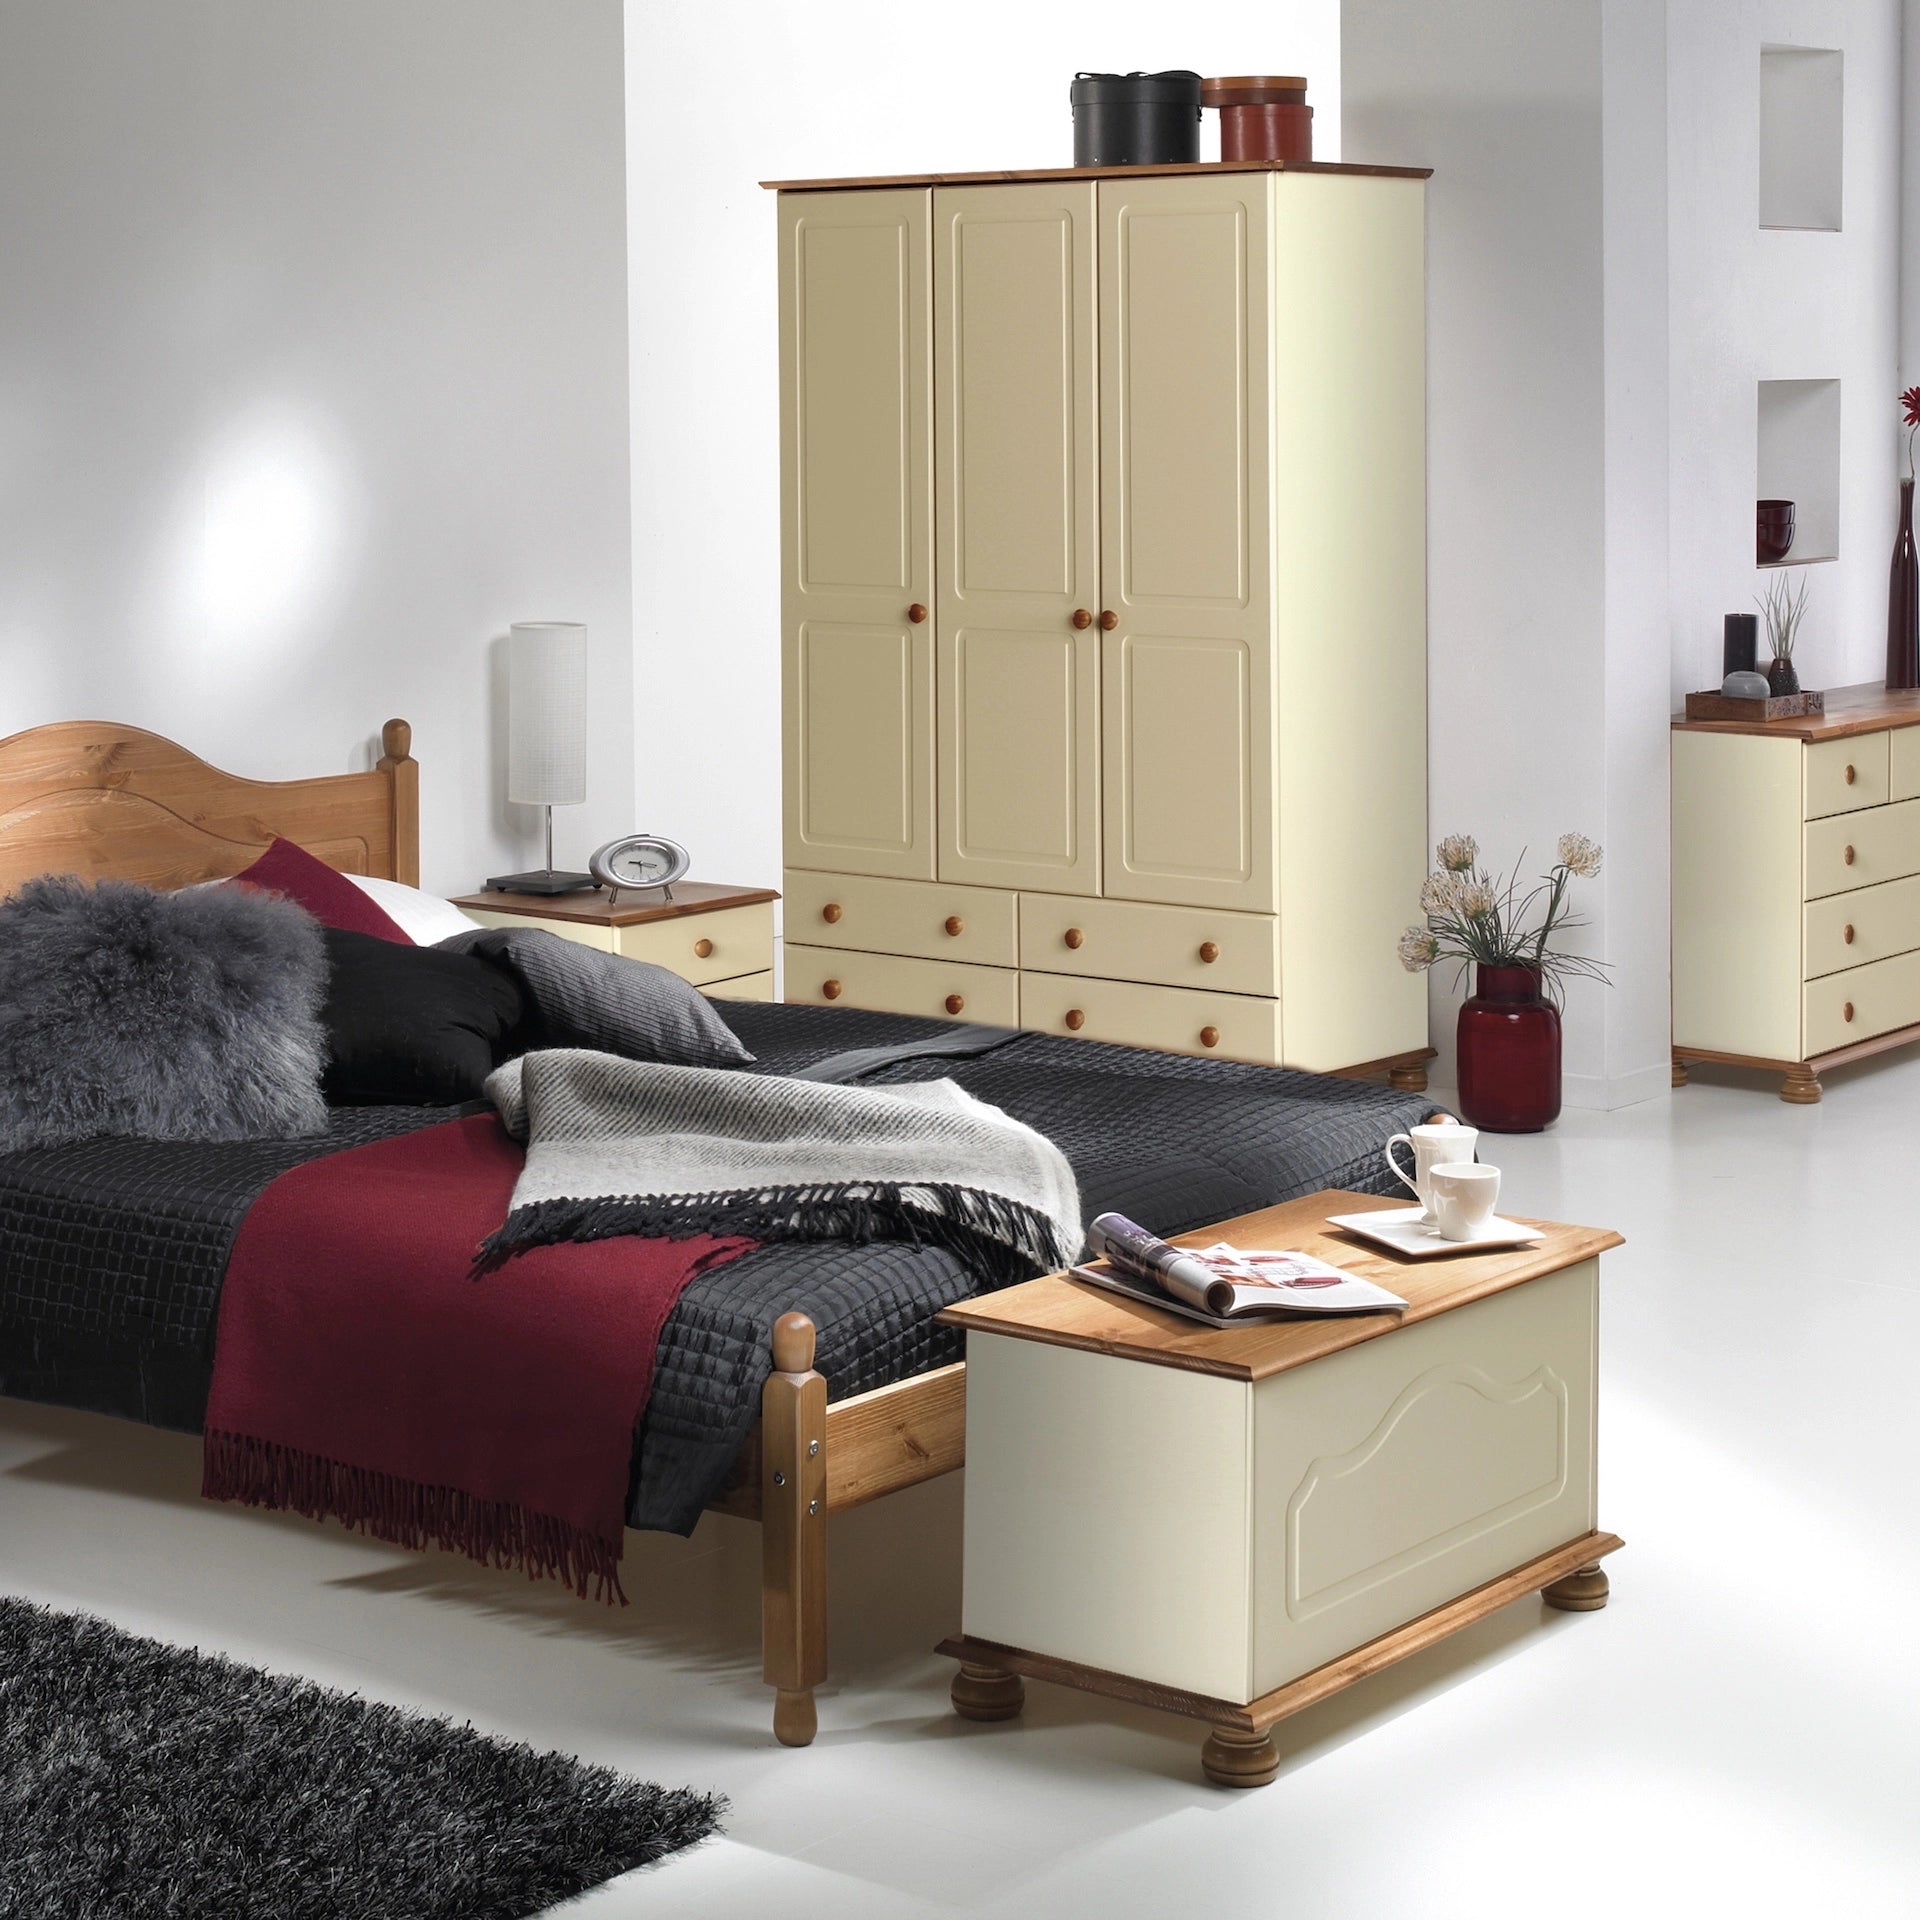 Furniture To Go Copenhagen Blanket Box in Cream/Pine